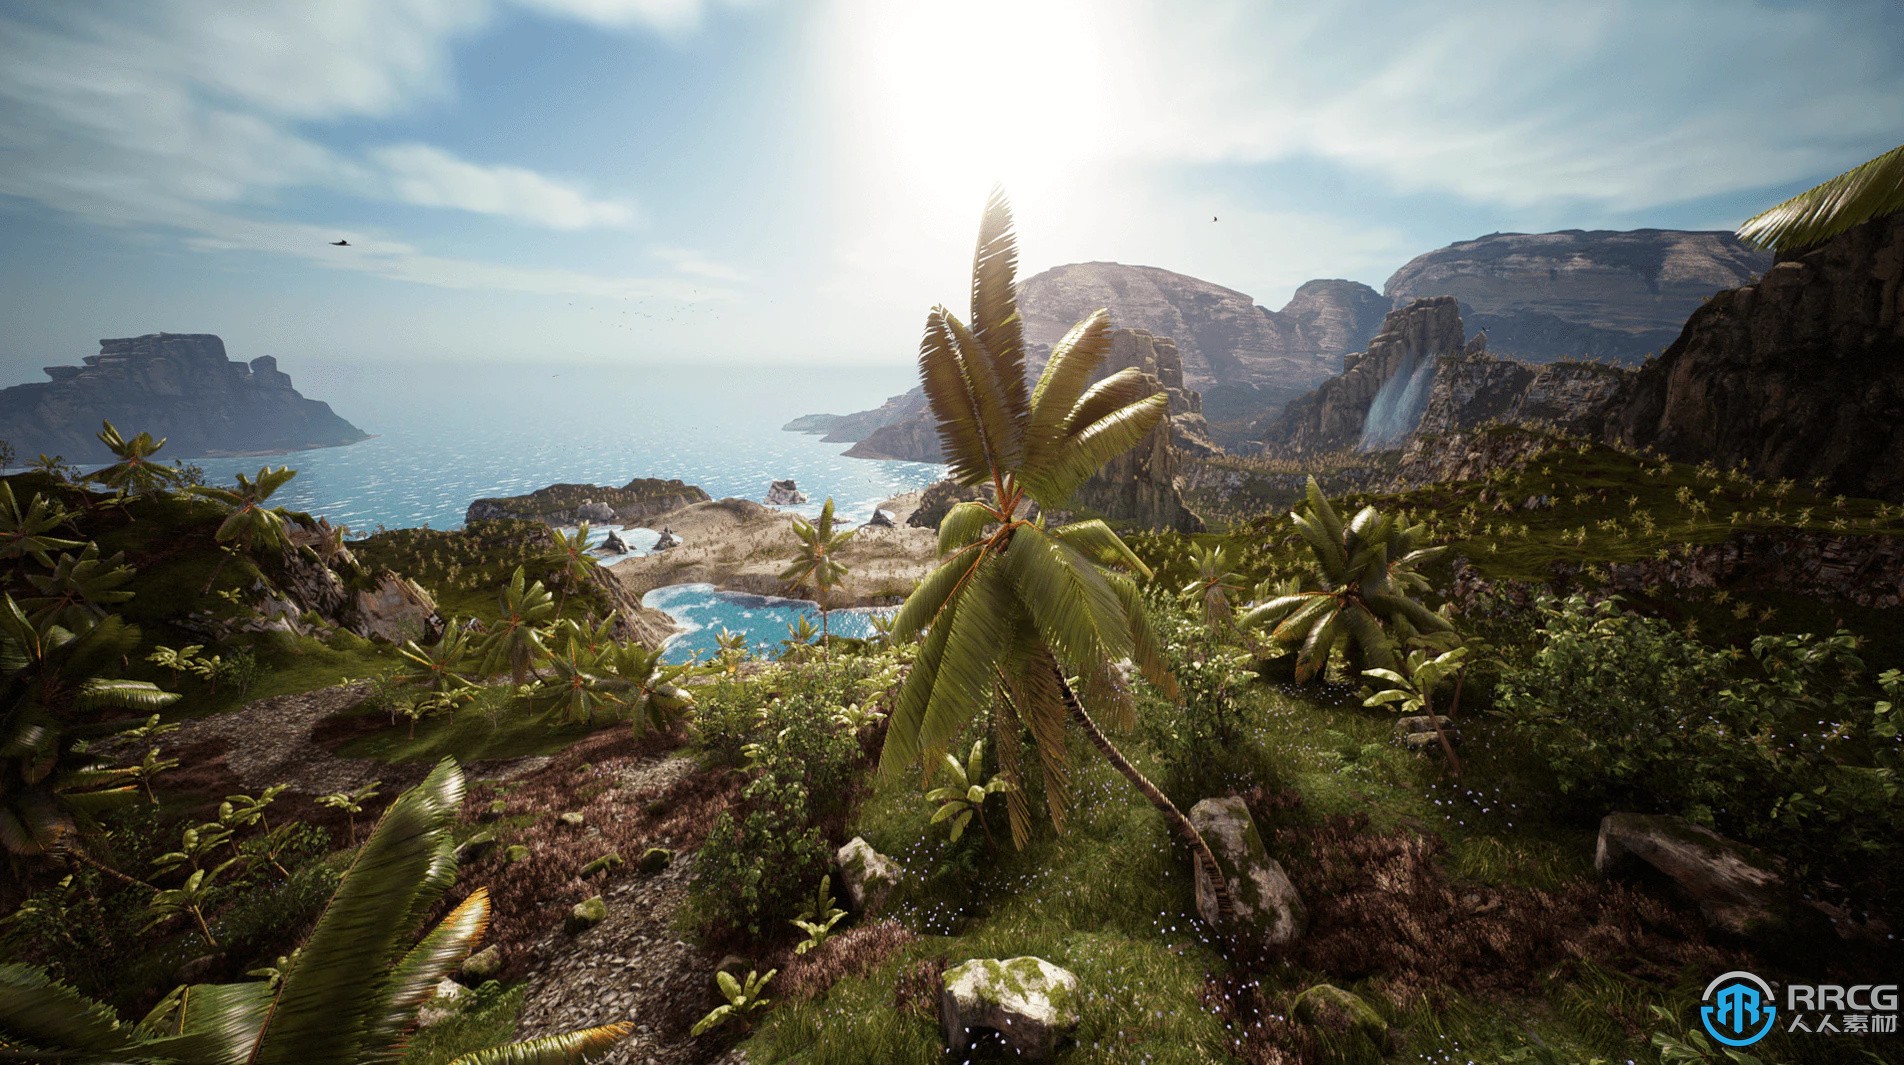 Unreal Engine虚幻游戏引擎游戏素材2022年1月合集第六季